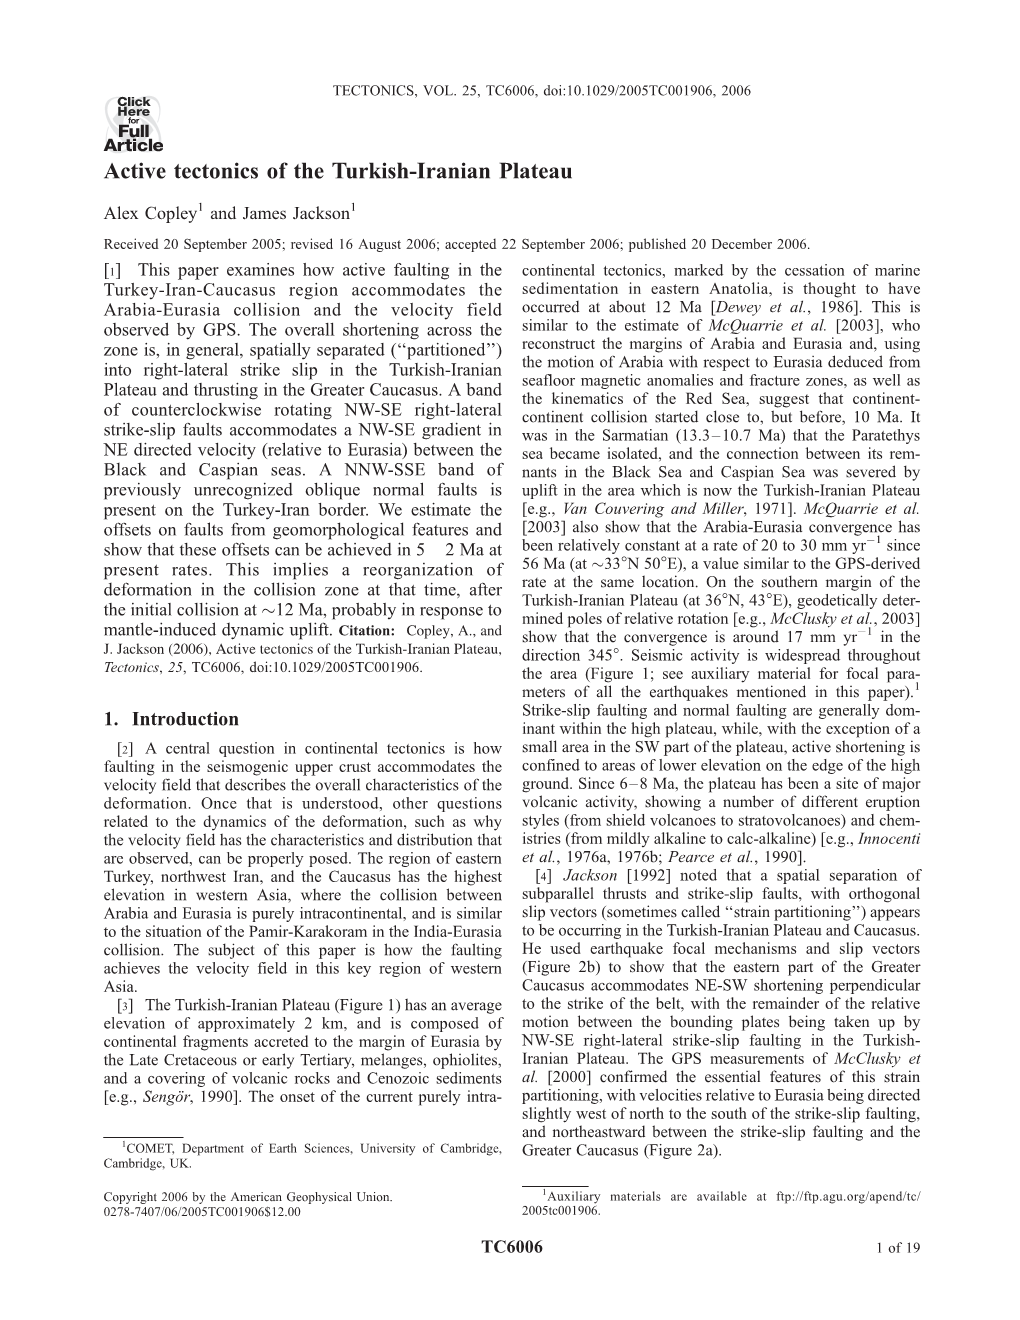 Active Tectonics of the Turkish-Iranian Plateau